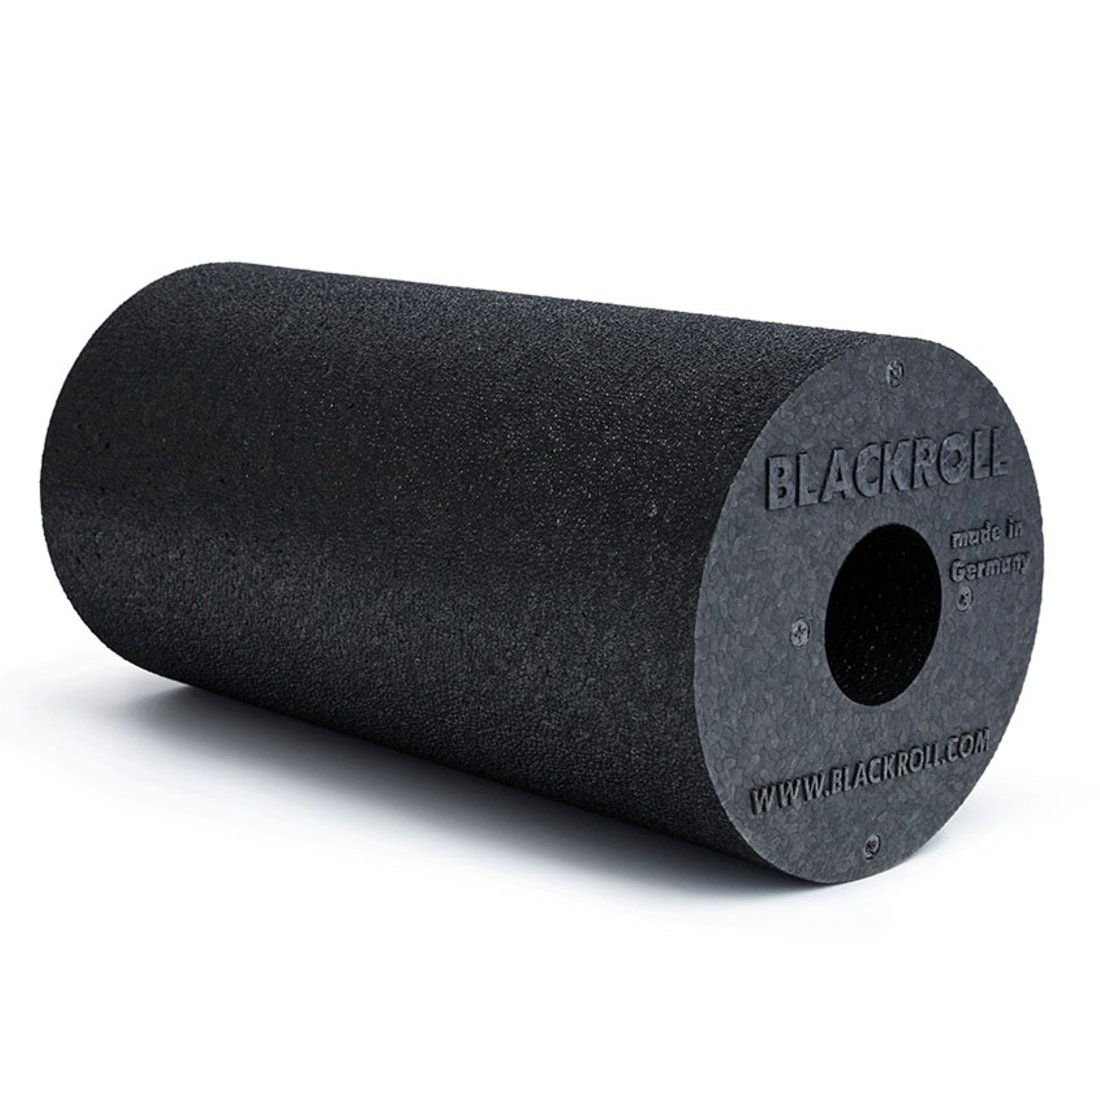 BLACKROLL® Standard Foam Roller - The Original